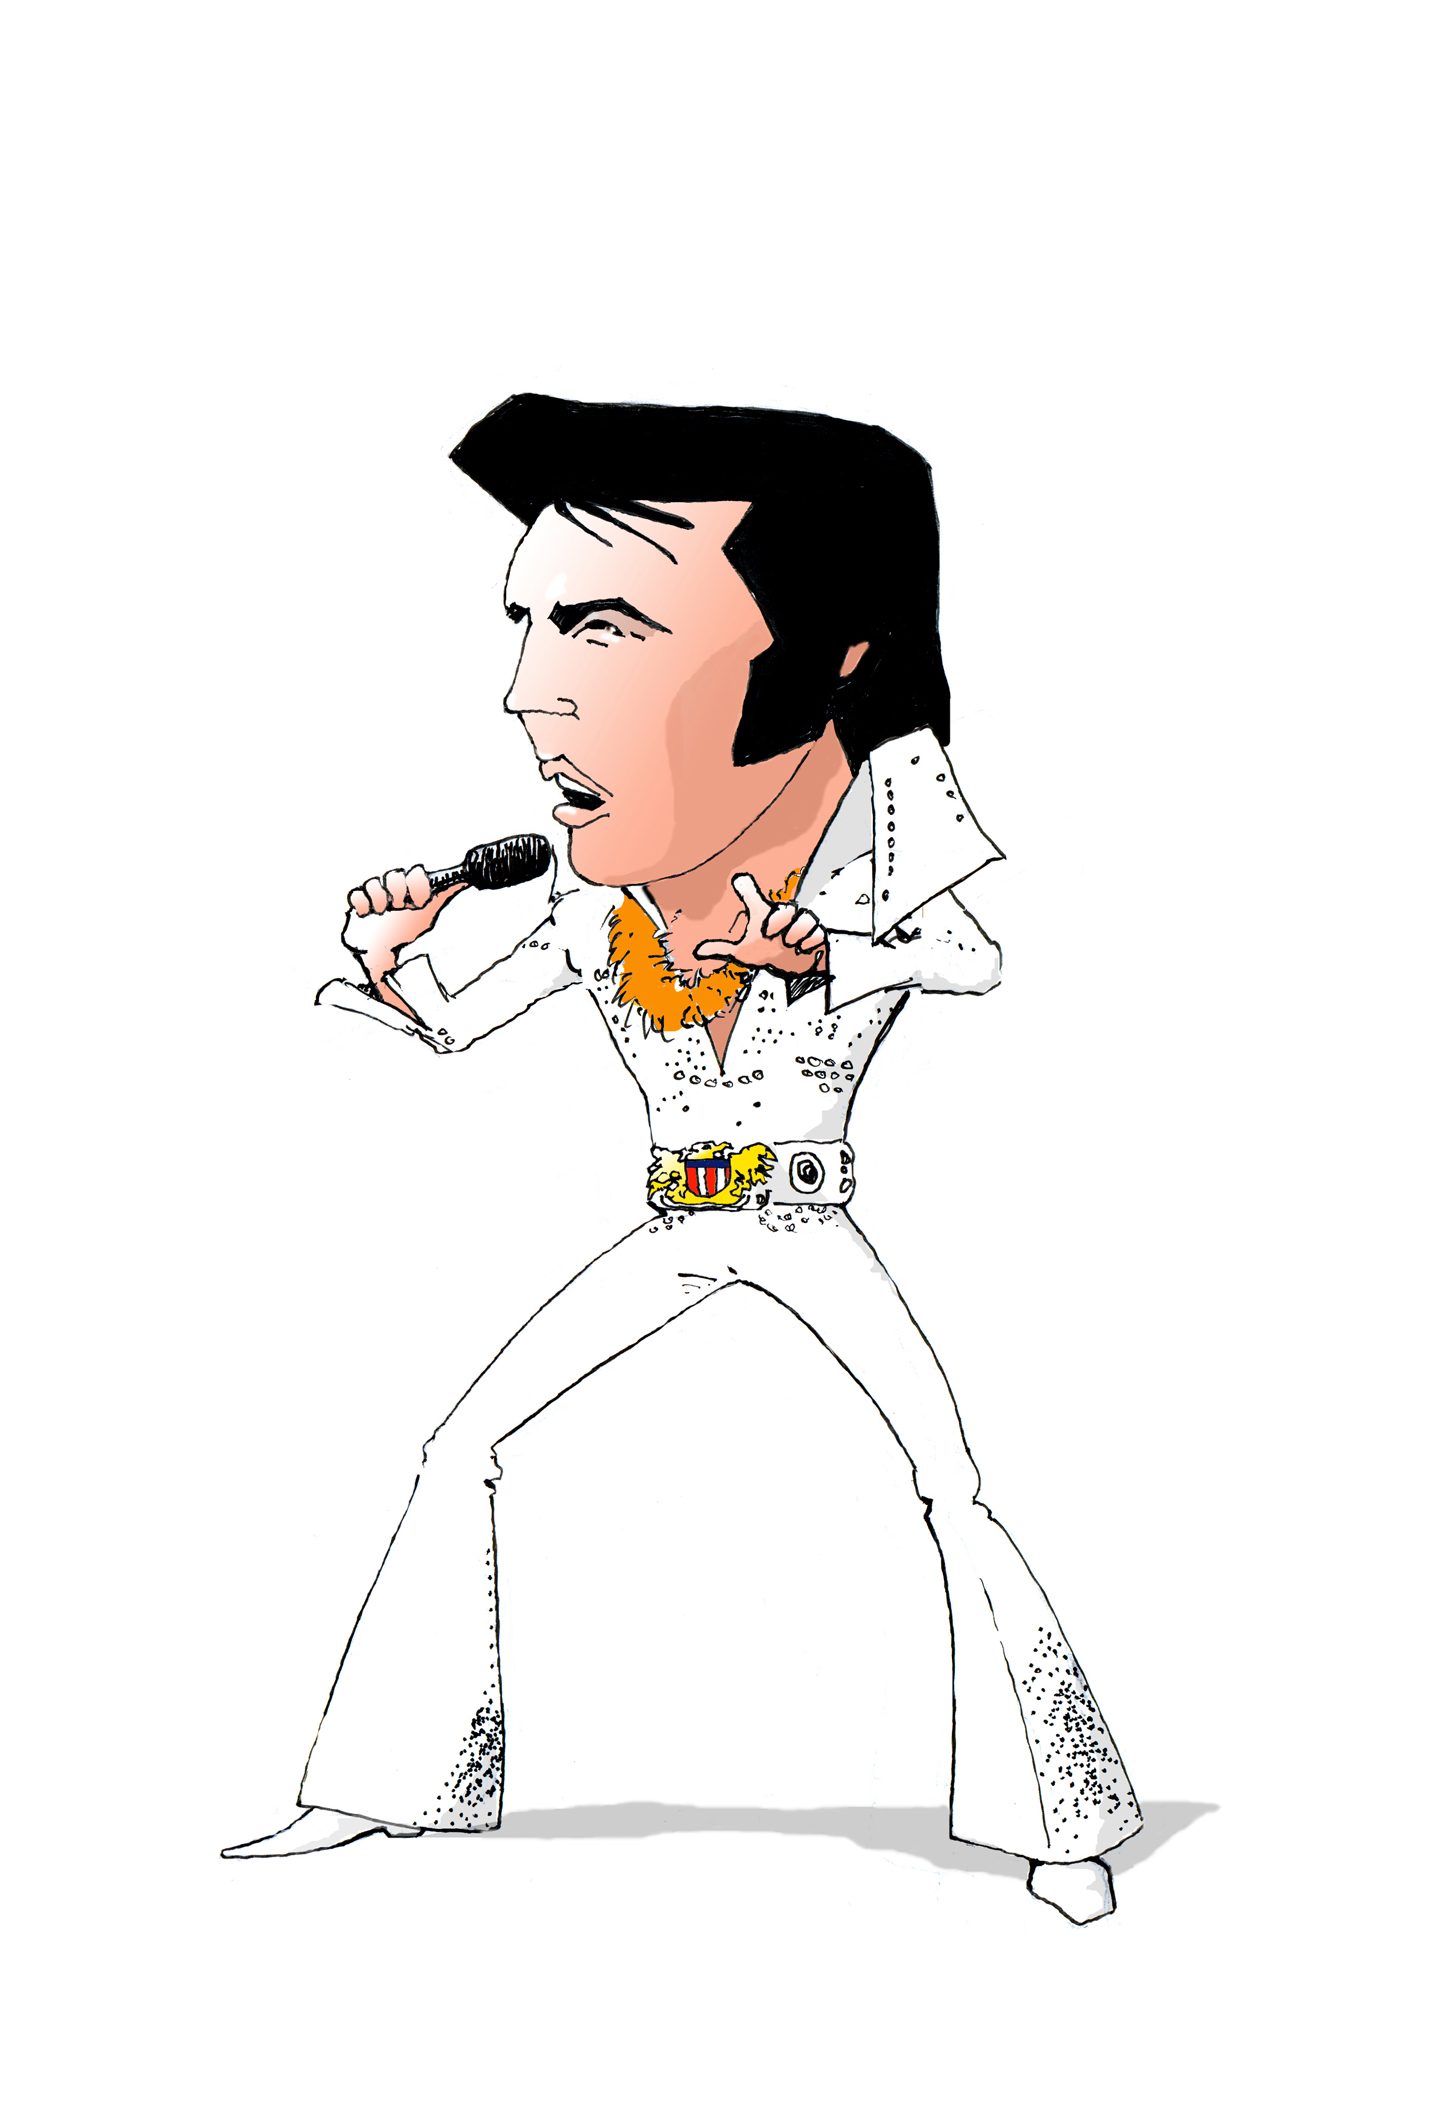 Cartoon Elvis The King of Cartoons